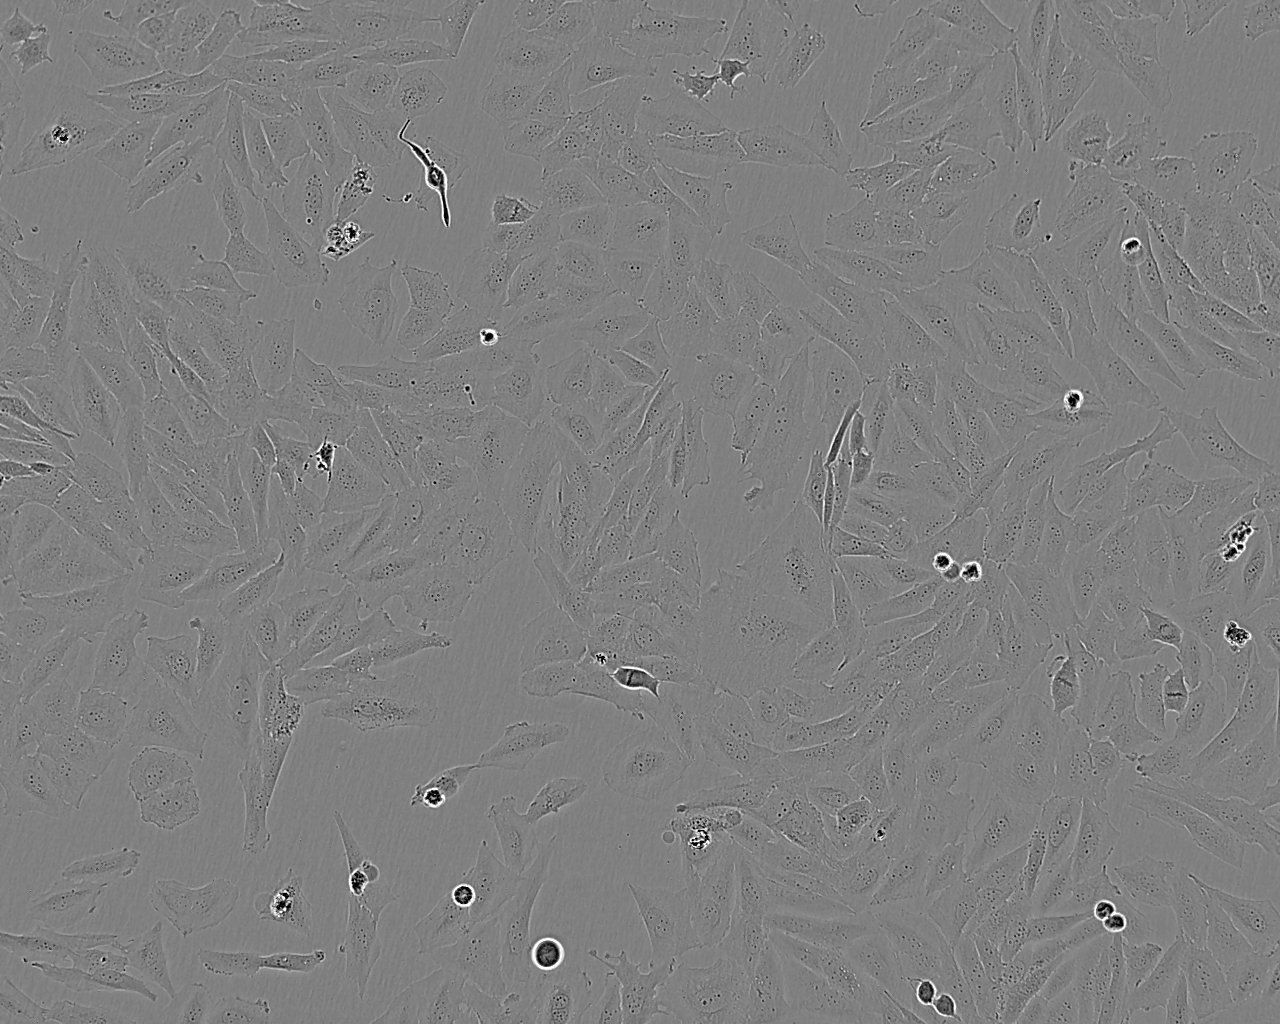 NCI-H69 epithelioid cells人小细胞肺癌细胞系,NCI-H69 epithelioid cells